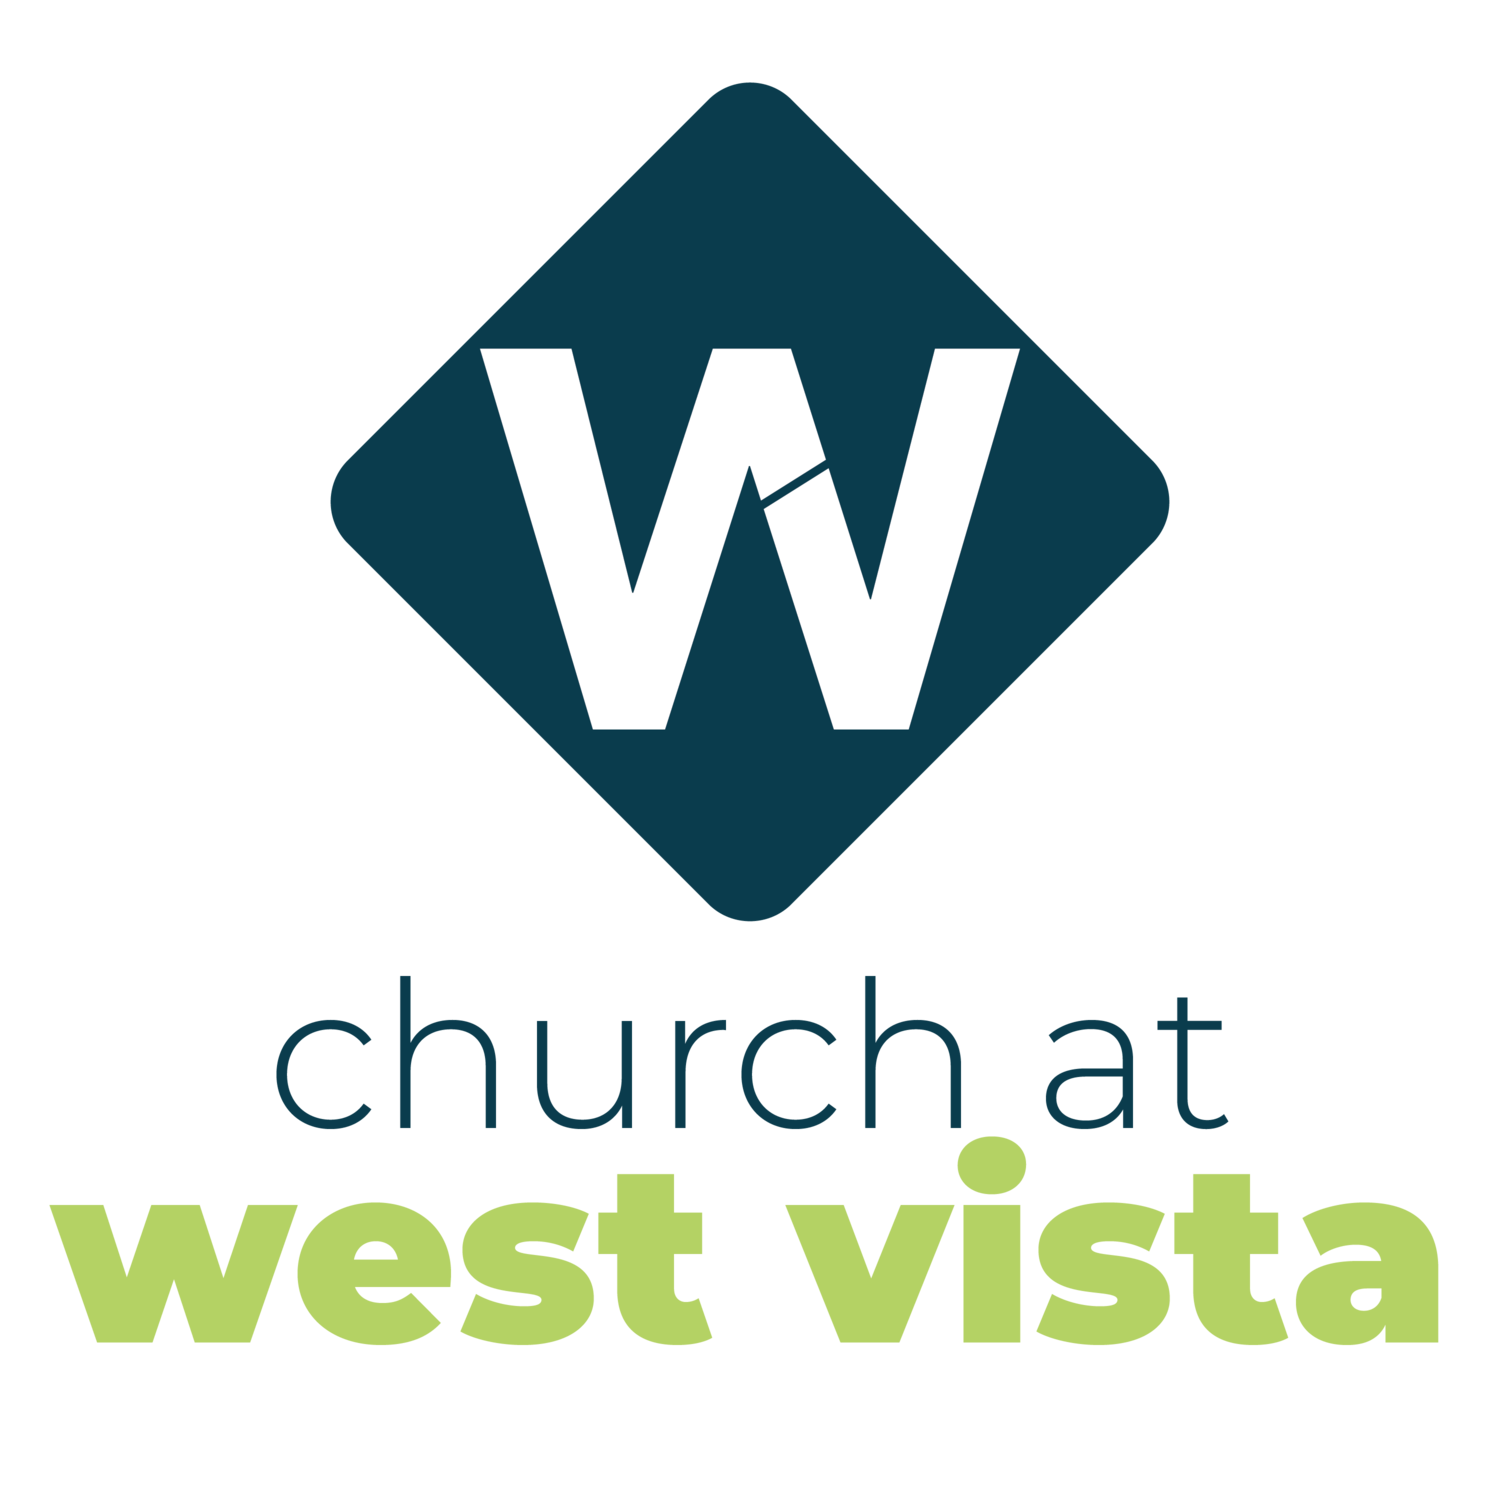 The Church at West Vista